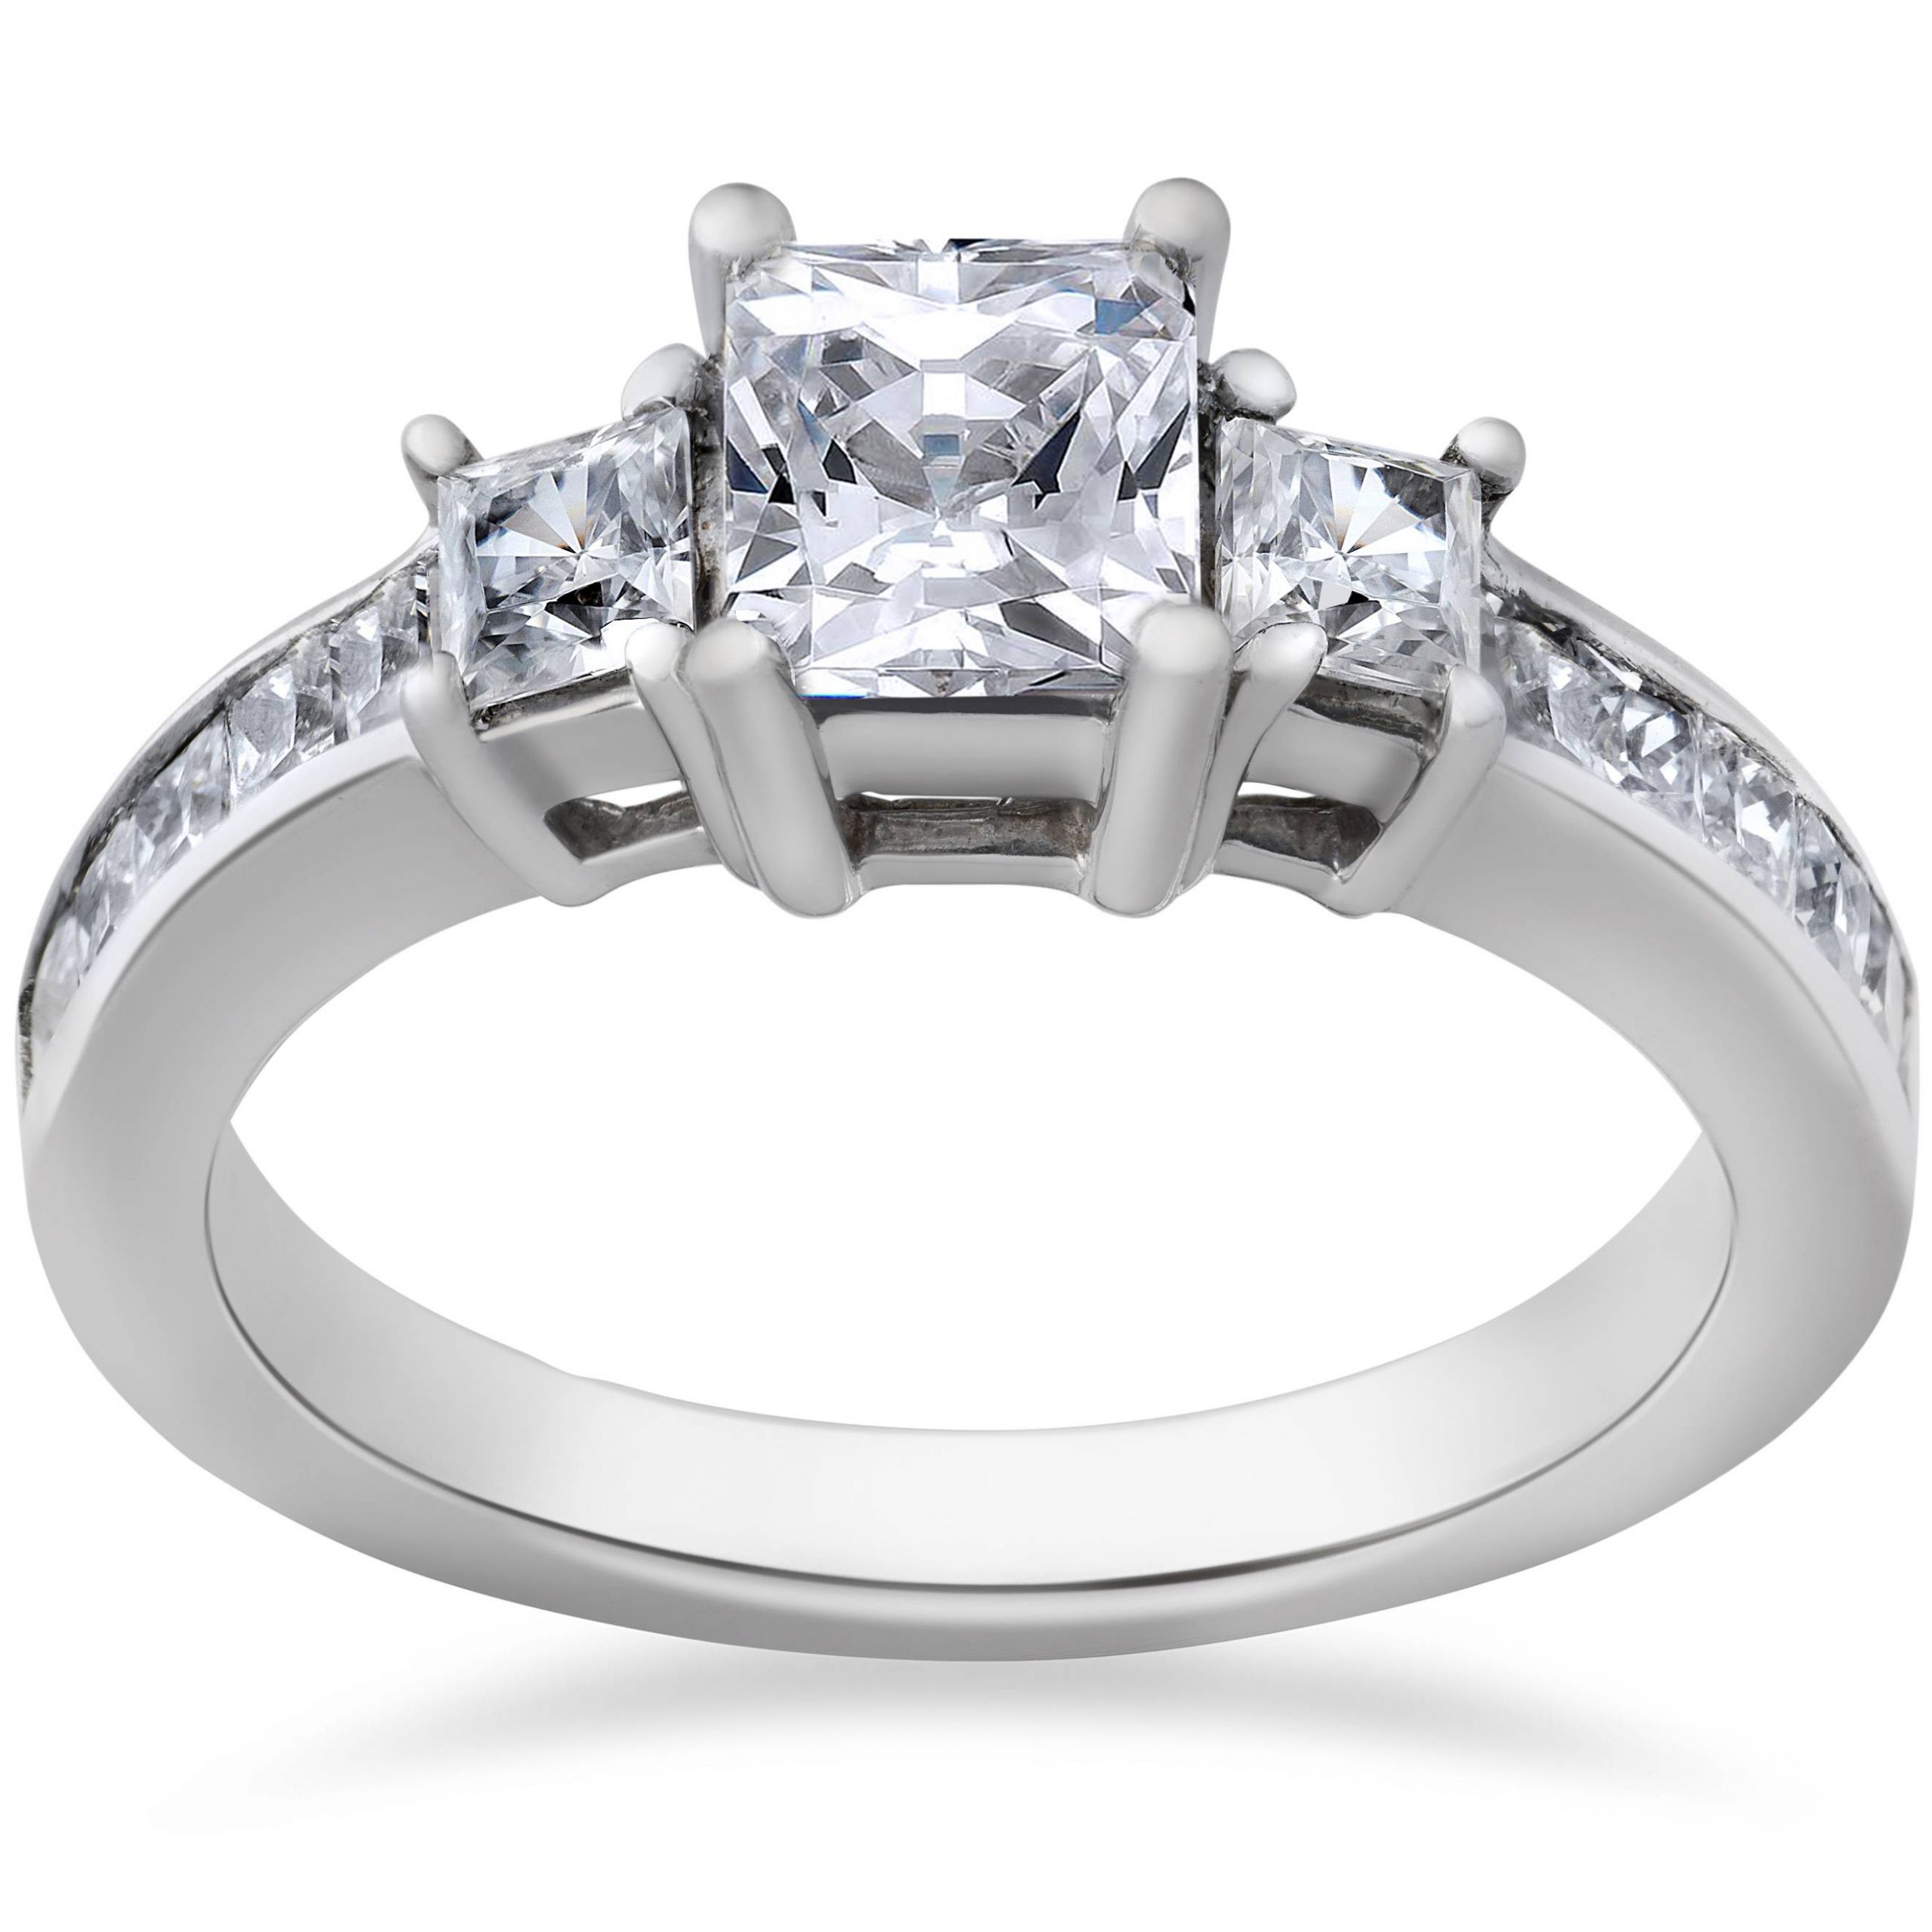 3 Stone Princess Cut Diamond Engagement Ring
 Princess Cut Diamond Engagement Ring 3 Stone 1 1 2ct 14k